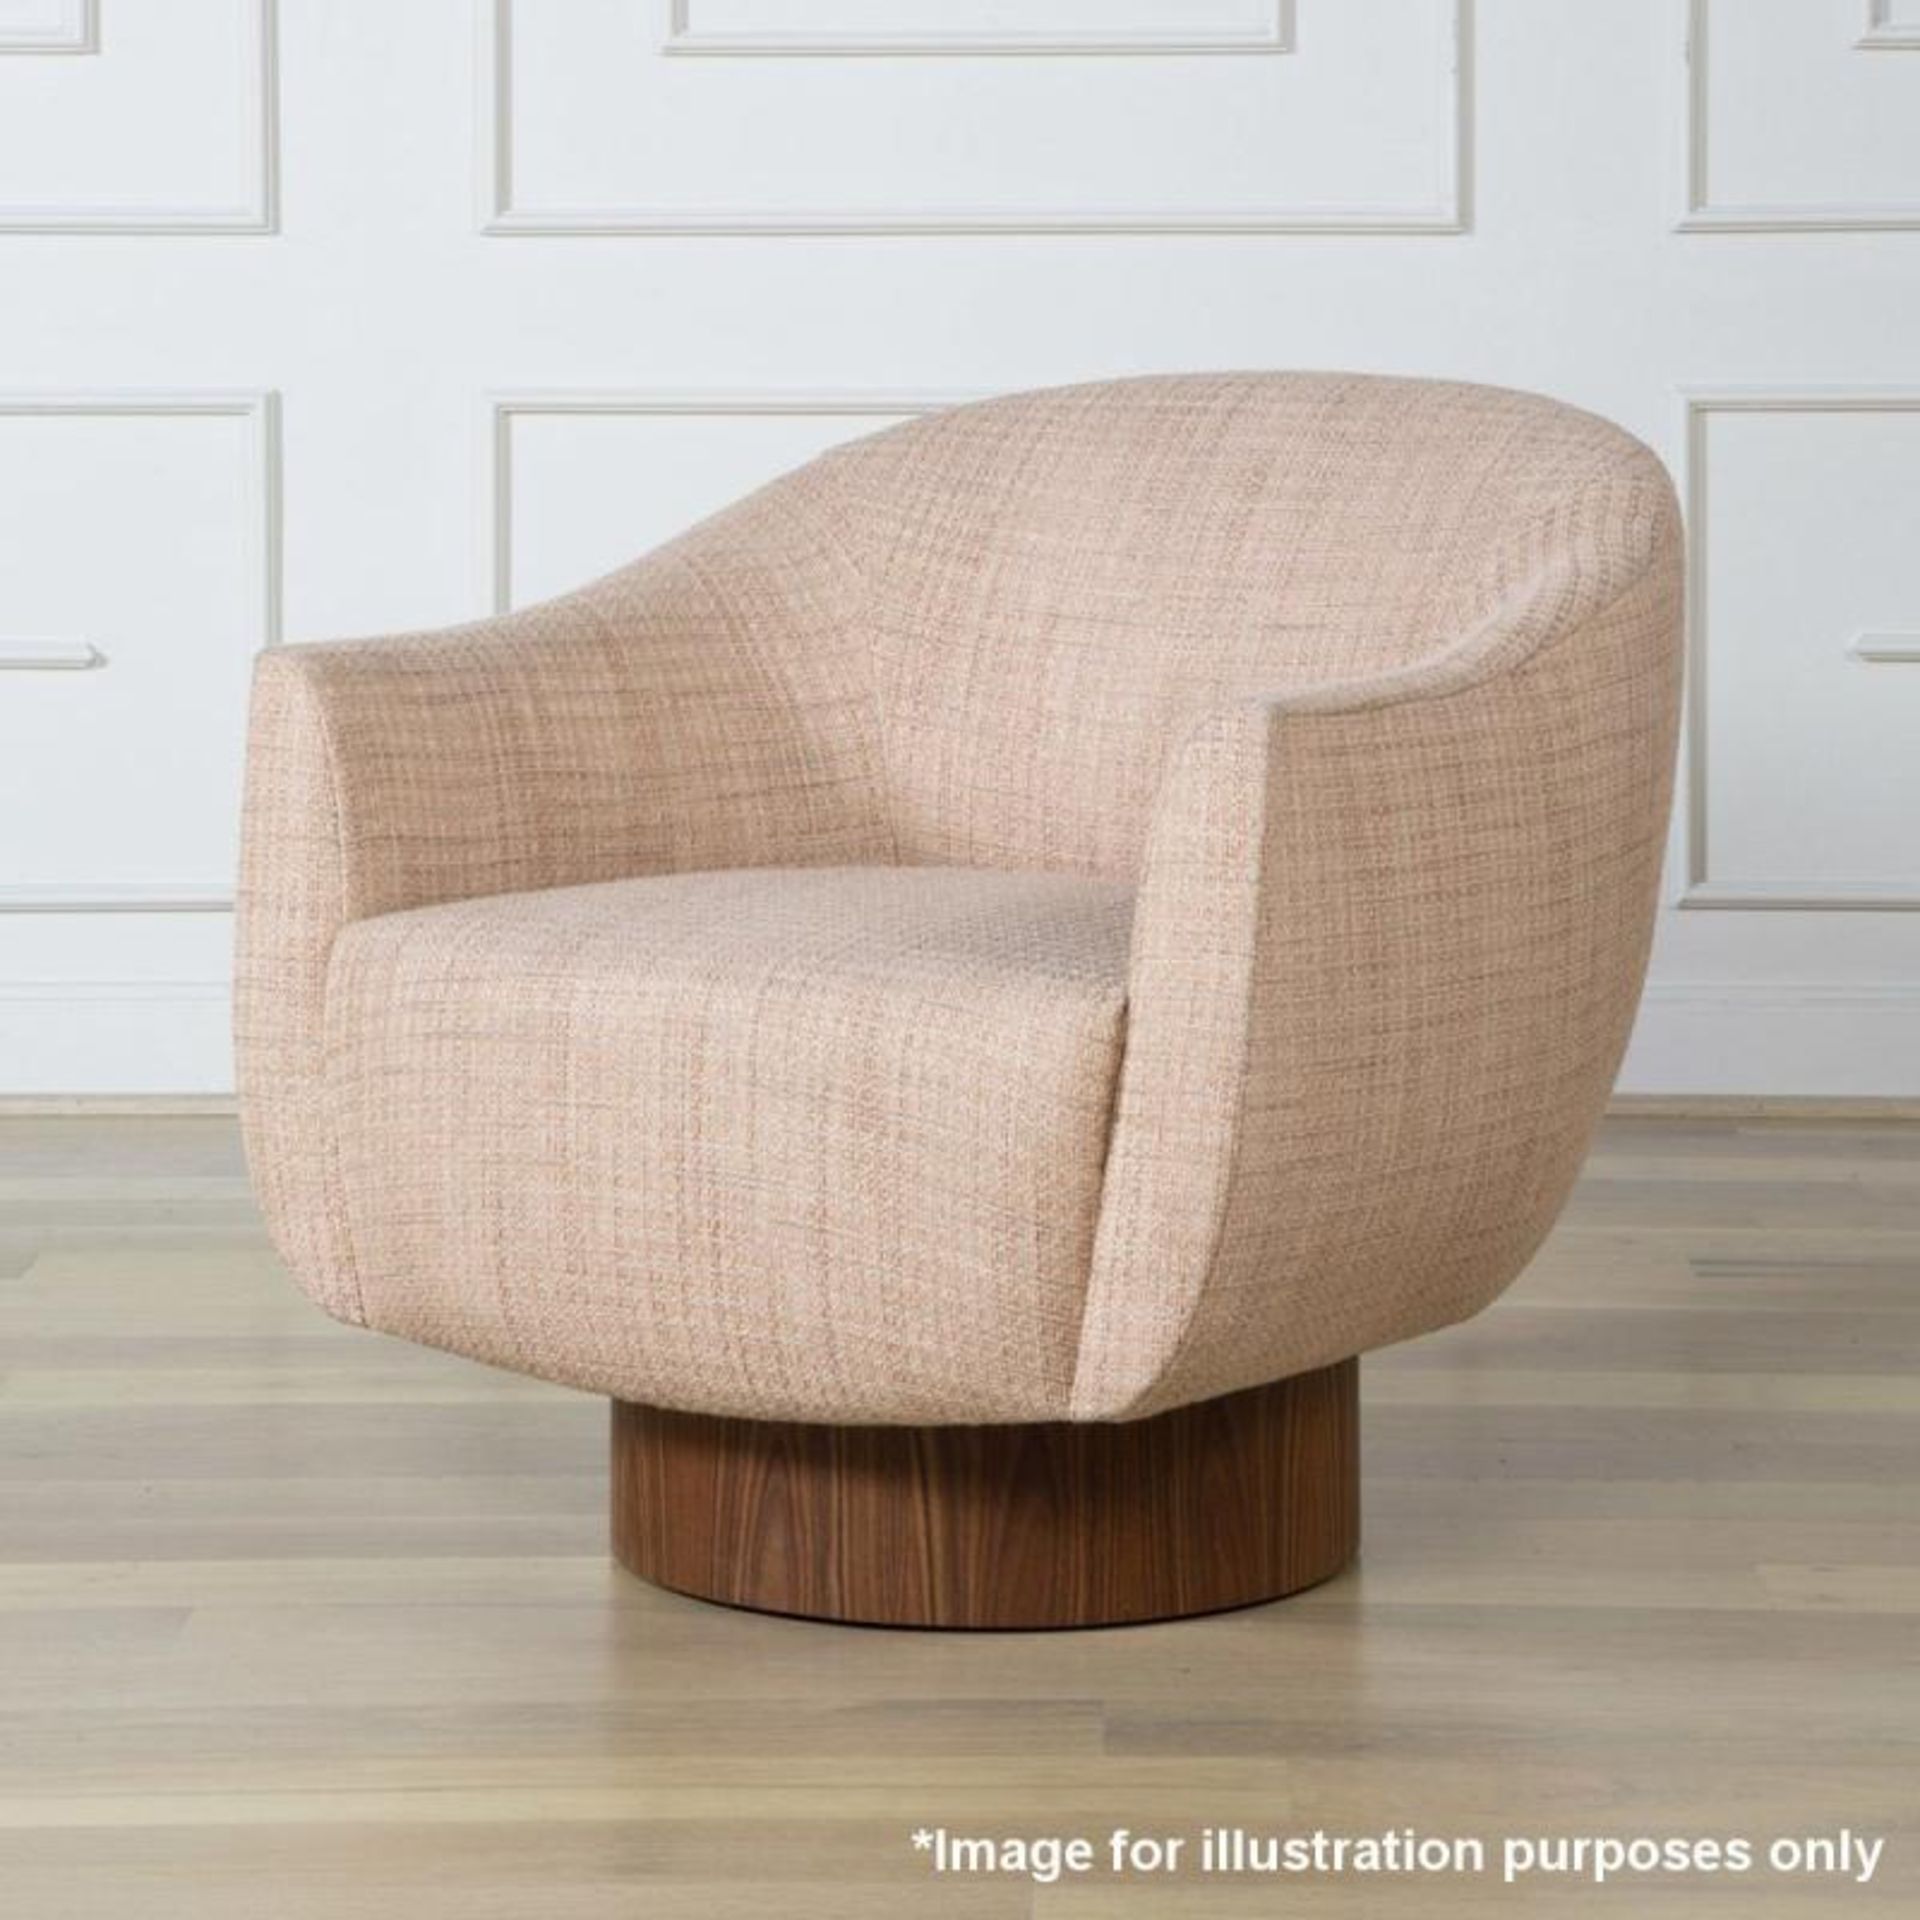 1 x KELLY WEARSTLER Sonara Swivel Chair Rosewood - Dimensions: 31” W x 35” D x 31” H - Ex-Display In - Image 5 of 28